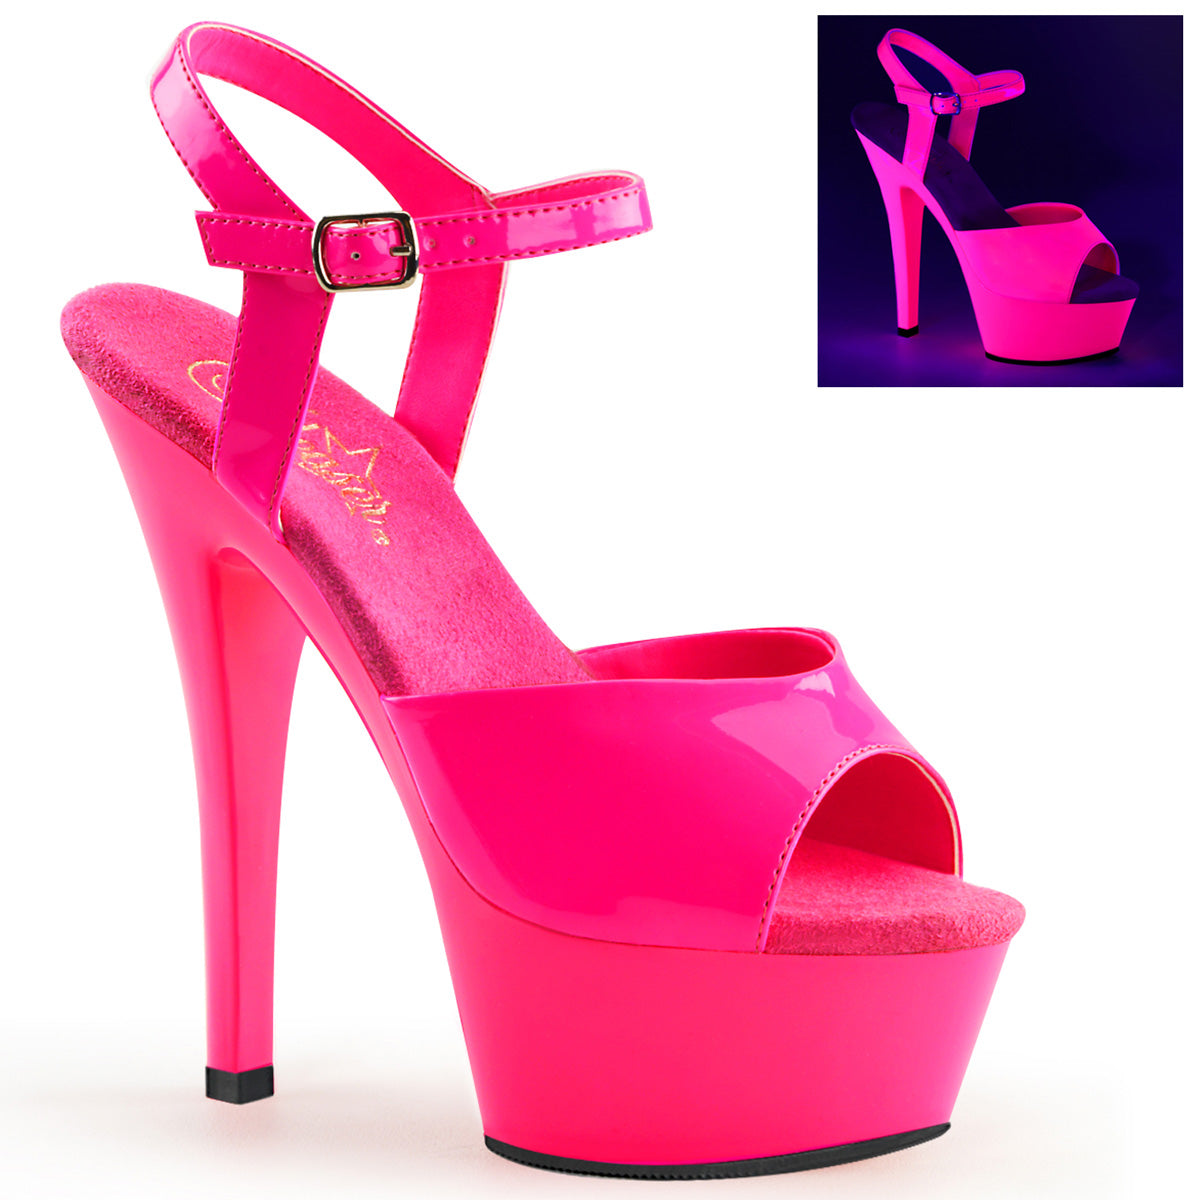 KISS-209UV 6" Heel Neon Hot Pink Stripper Platforms High Heels